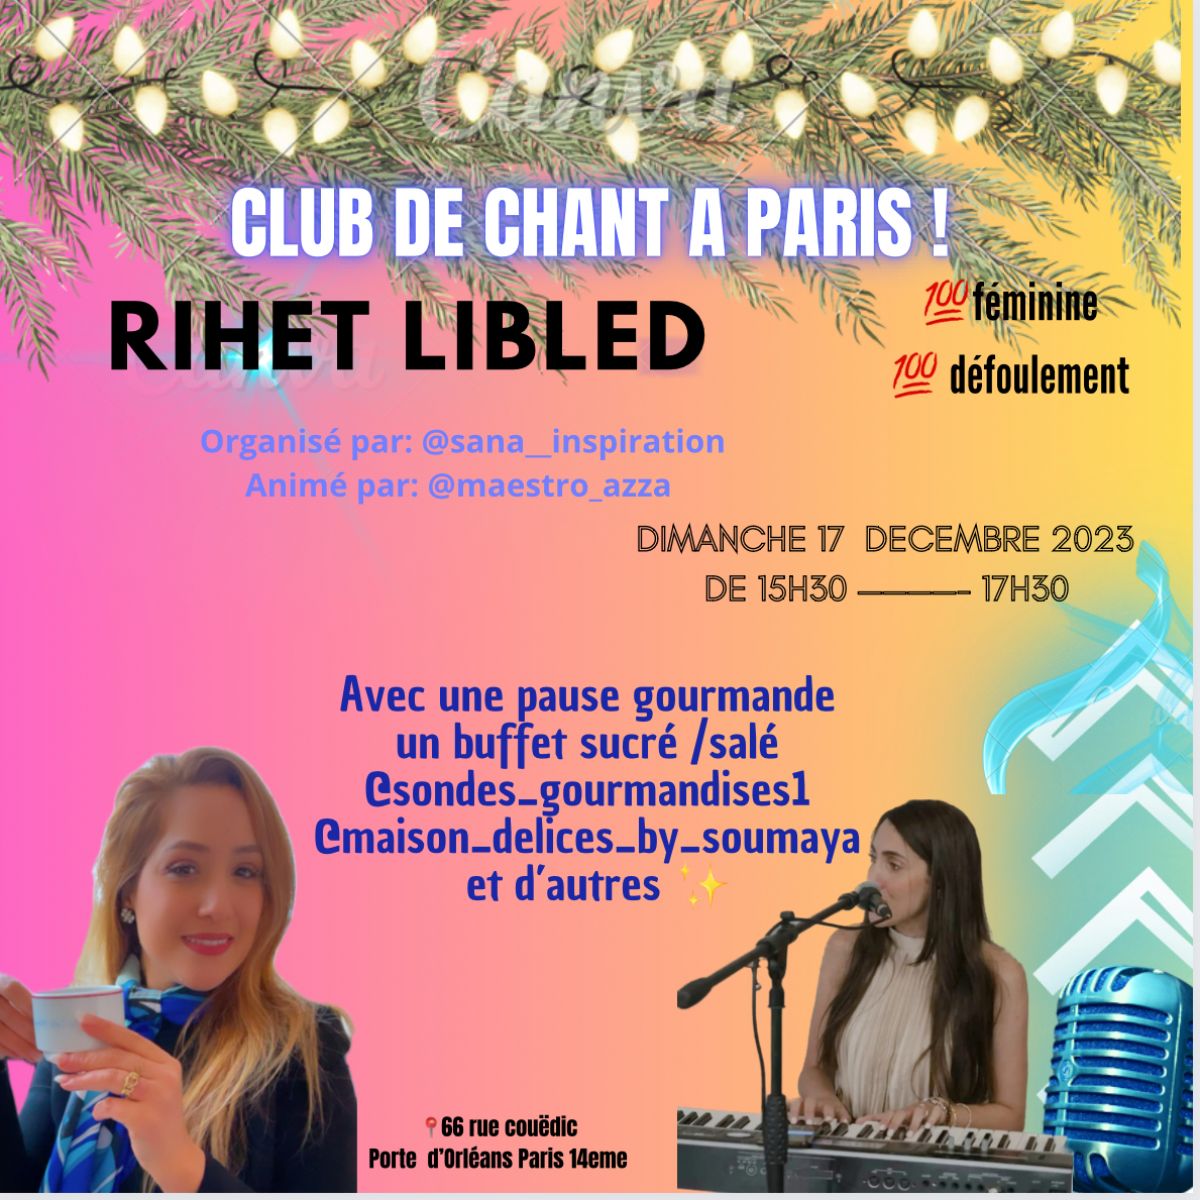 Club de chant RIHET LIBLED by Sana inspiration